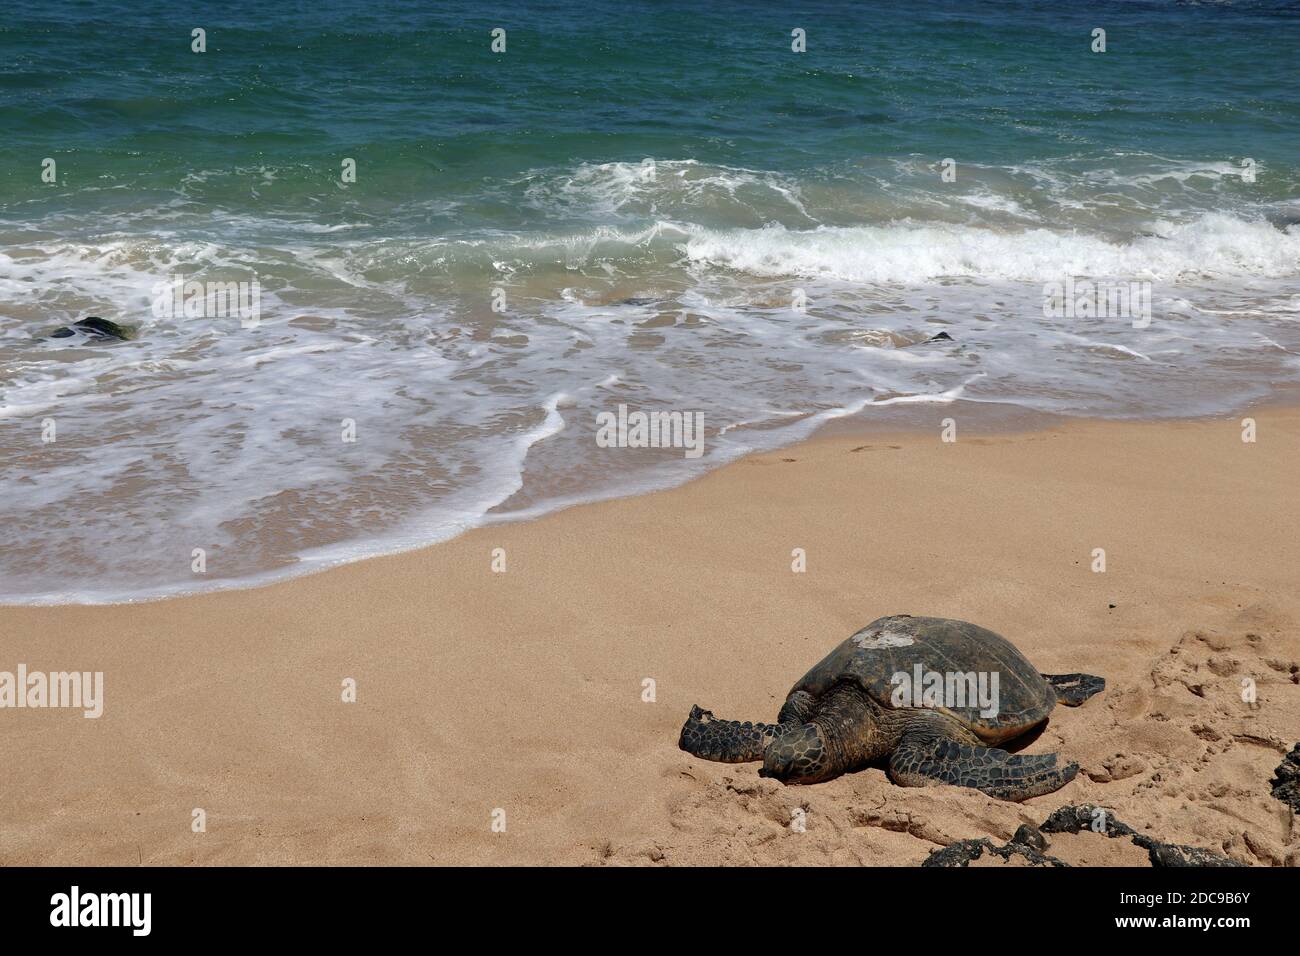 Sea turtles in Hawaii paradise Stock Photo - Alamy